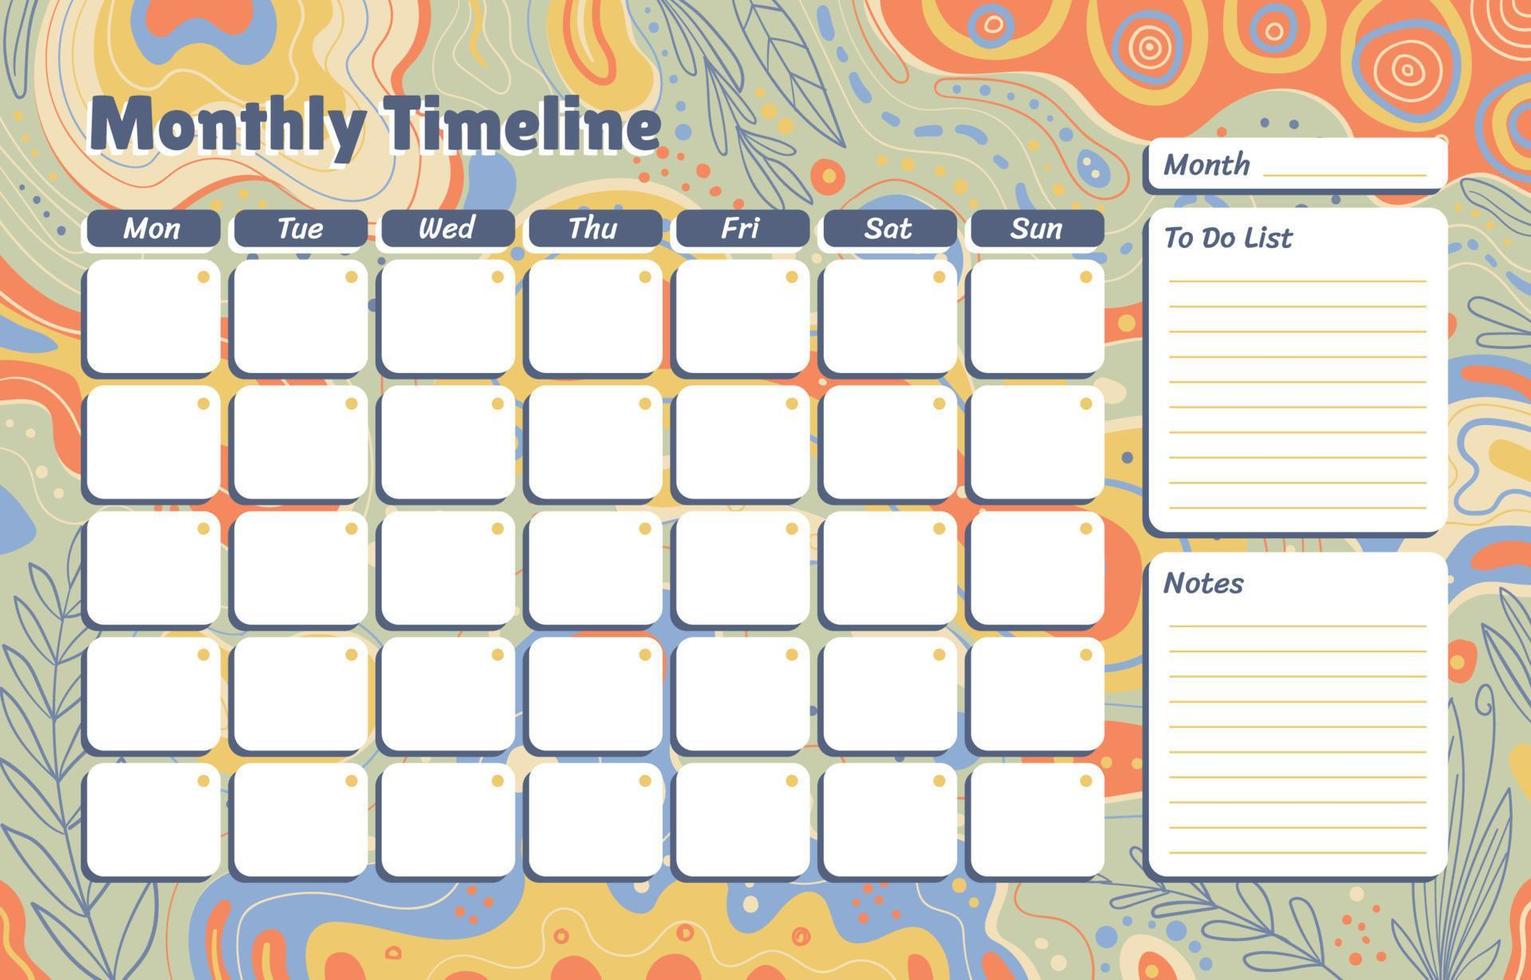 Calendar Monthly Timeline Design Template vector